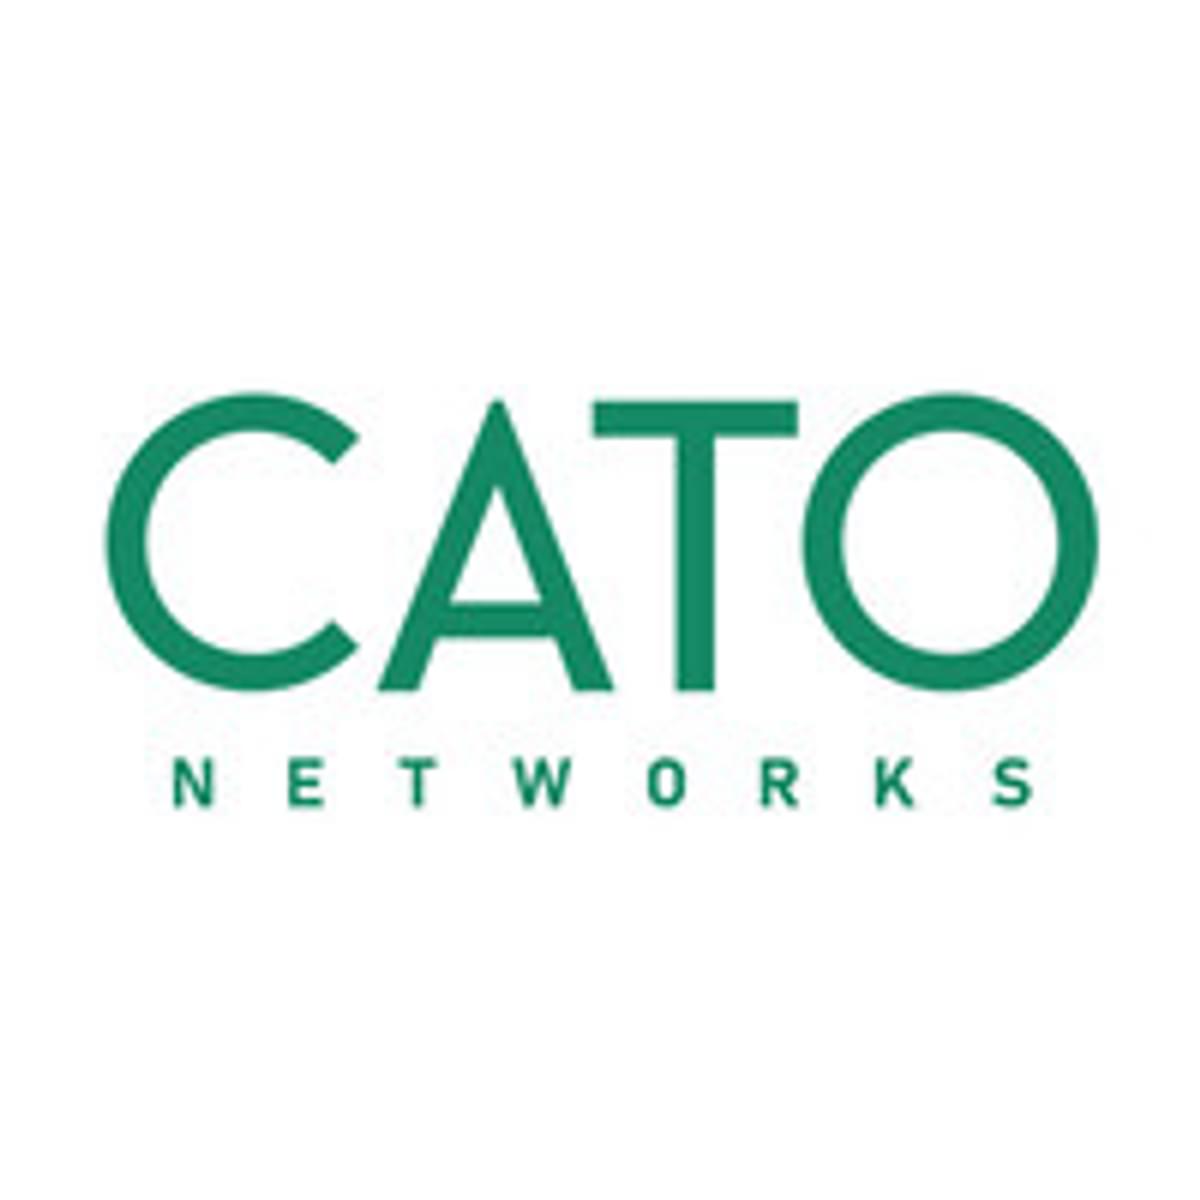 Cato Networks haalt flinke kapitaalinjectie op image